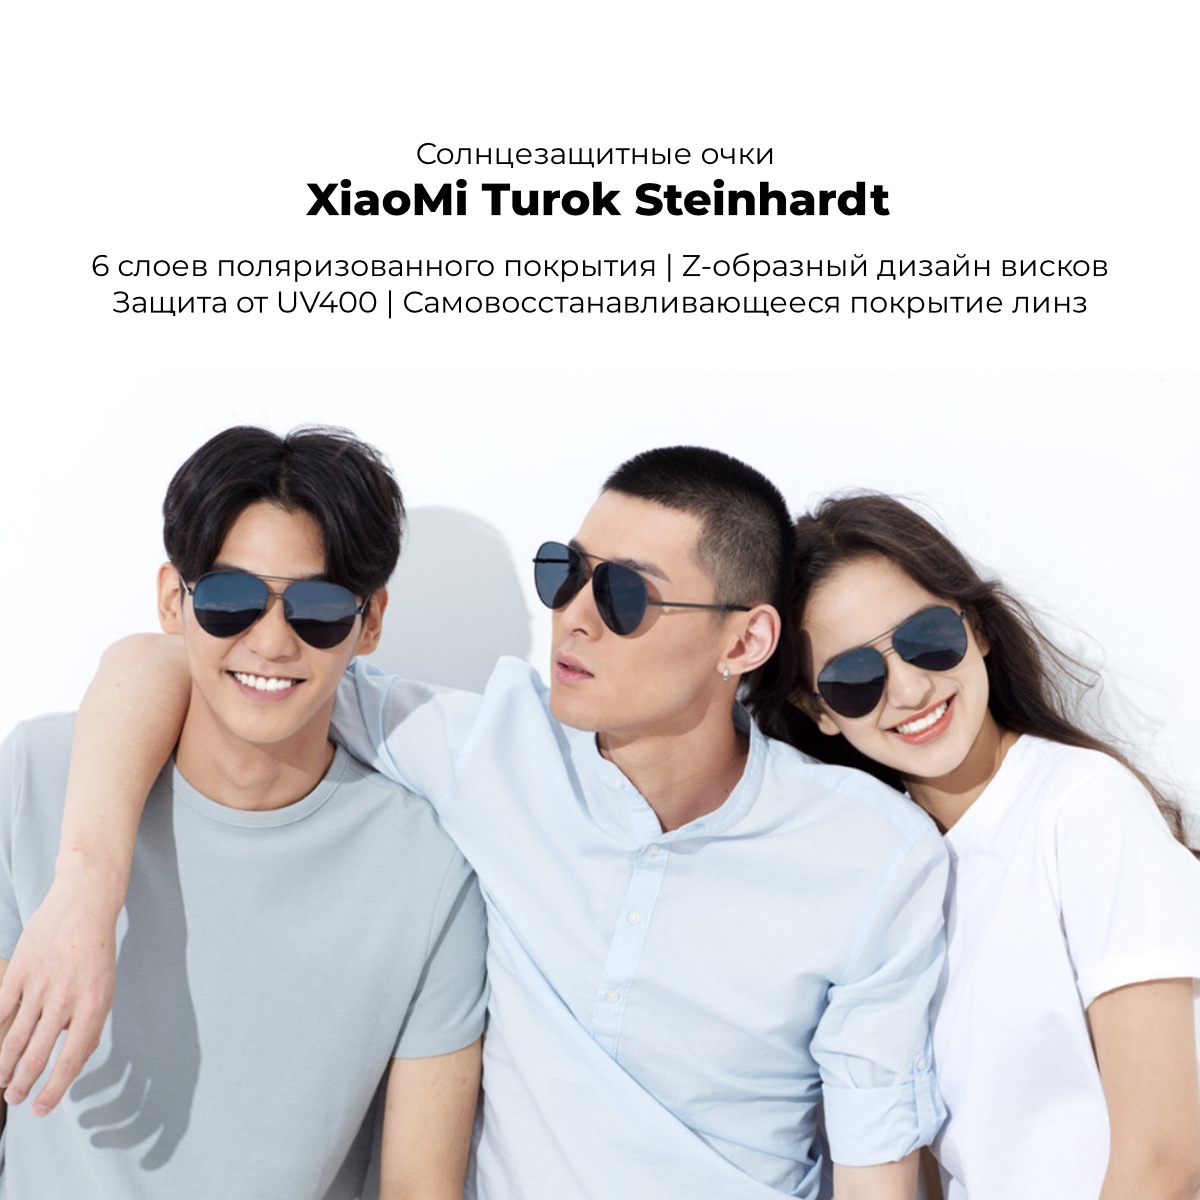 XiaoMi-Turok-Steinhardt-02